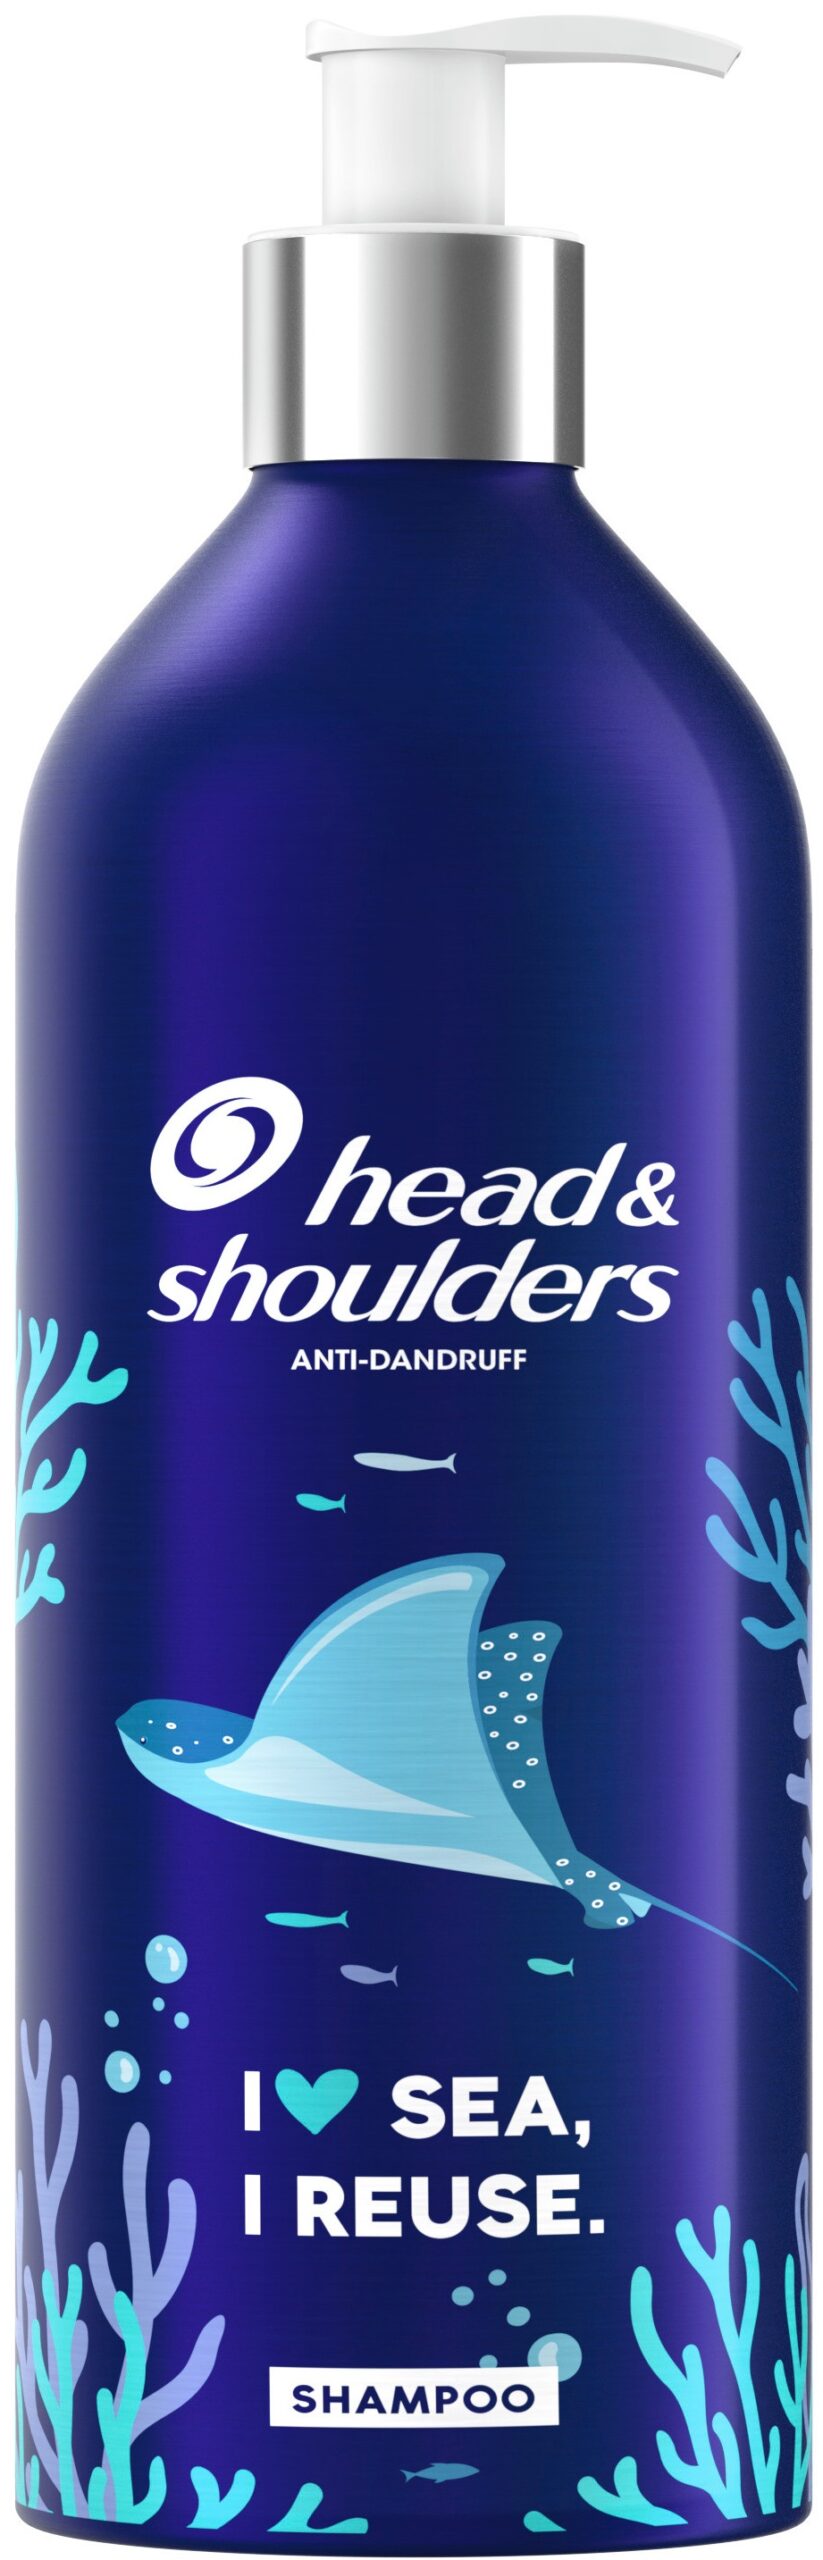 head–shoulders-classic-clean-anti-dandruff-shampoo-refillable-bottle-430ml-1142-370-0430_1